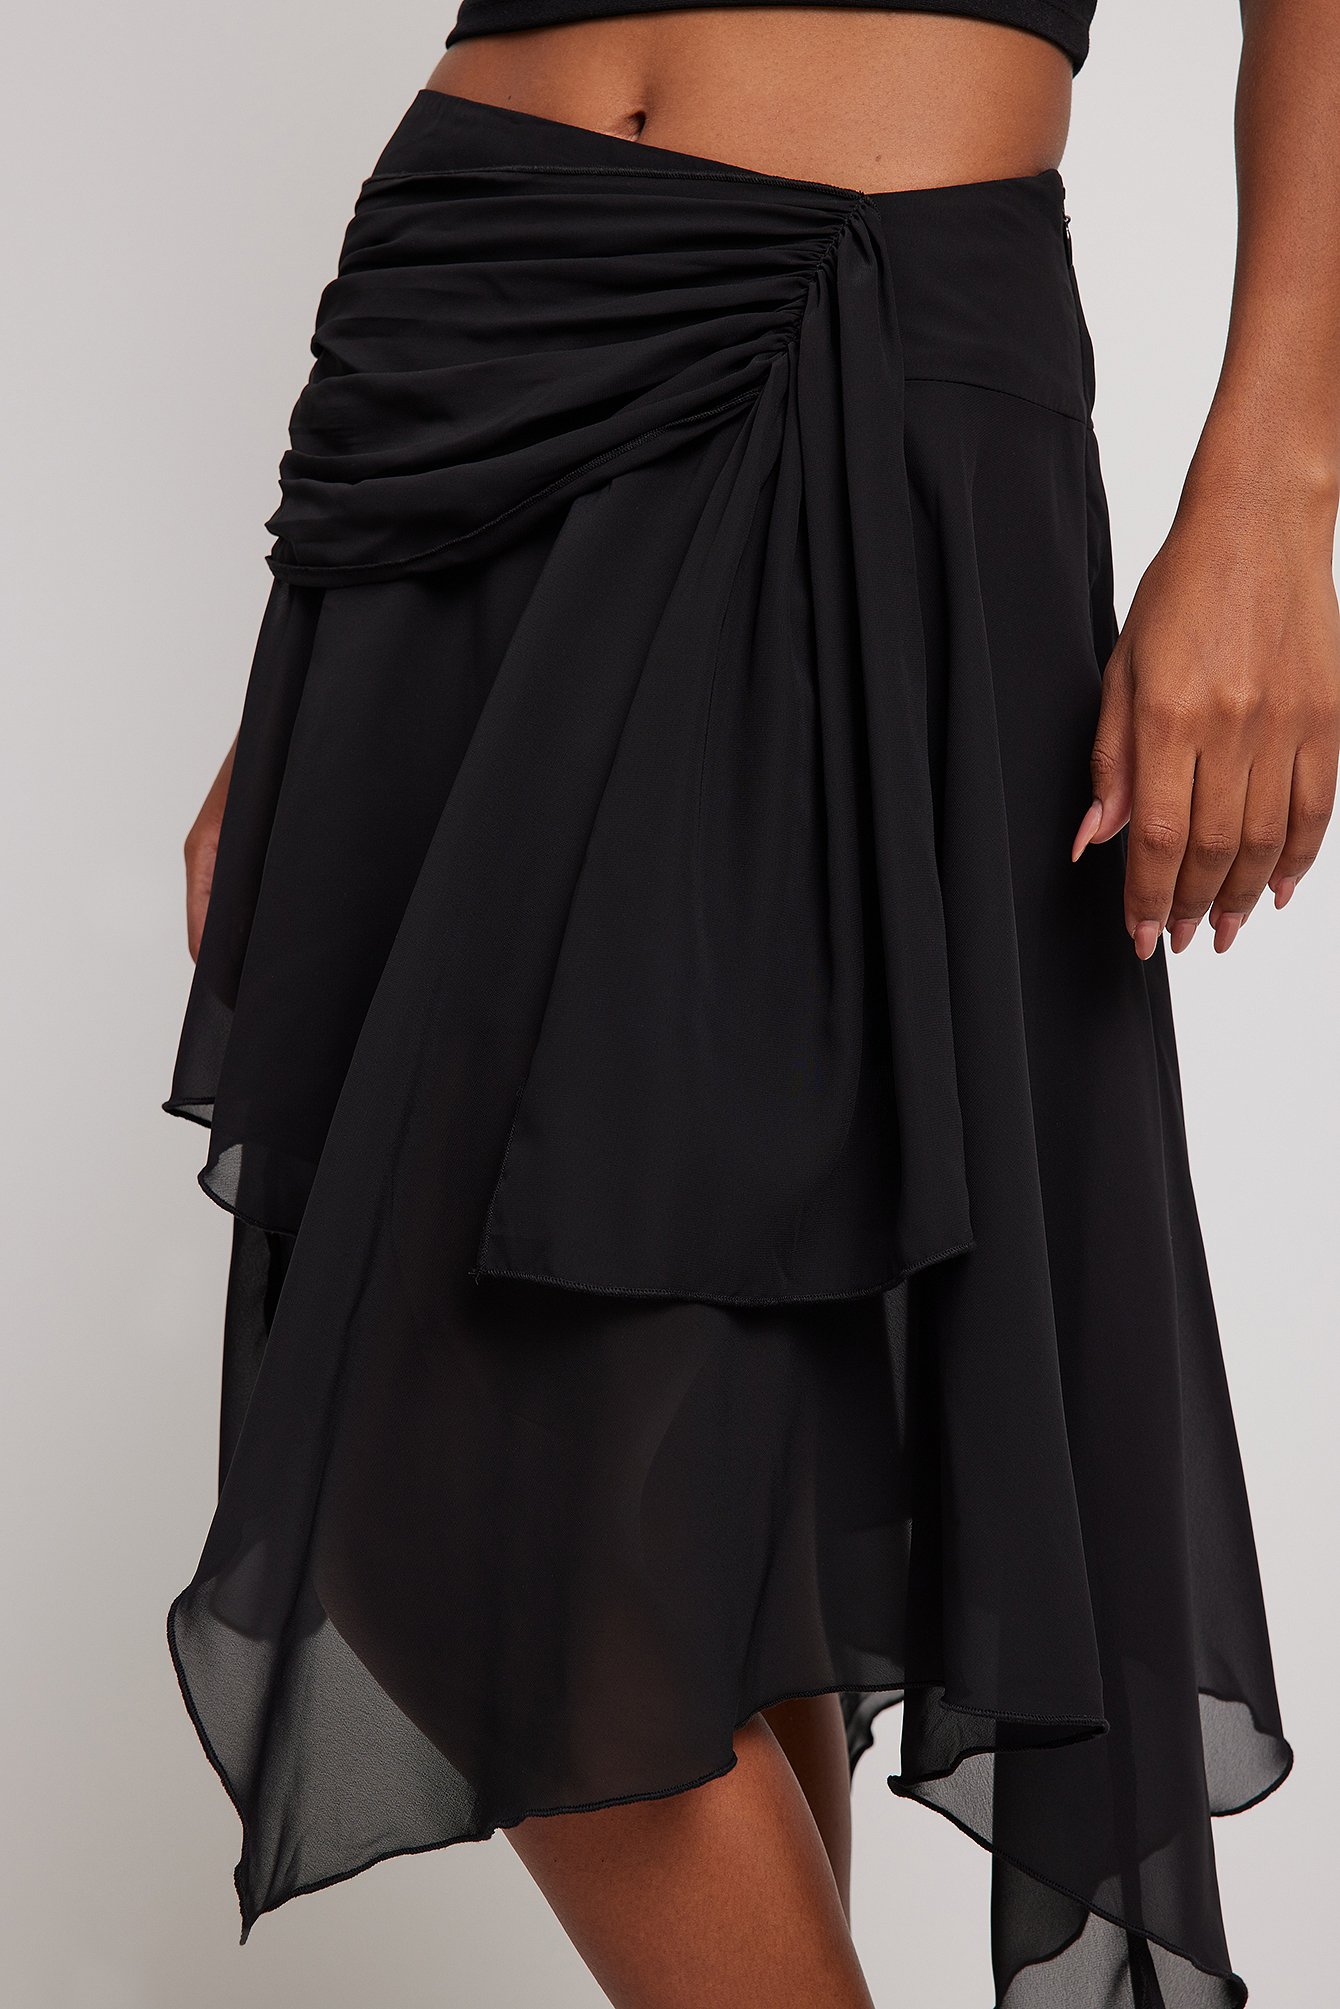 Black Uneven Chiffon Skirt